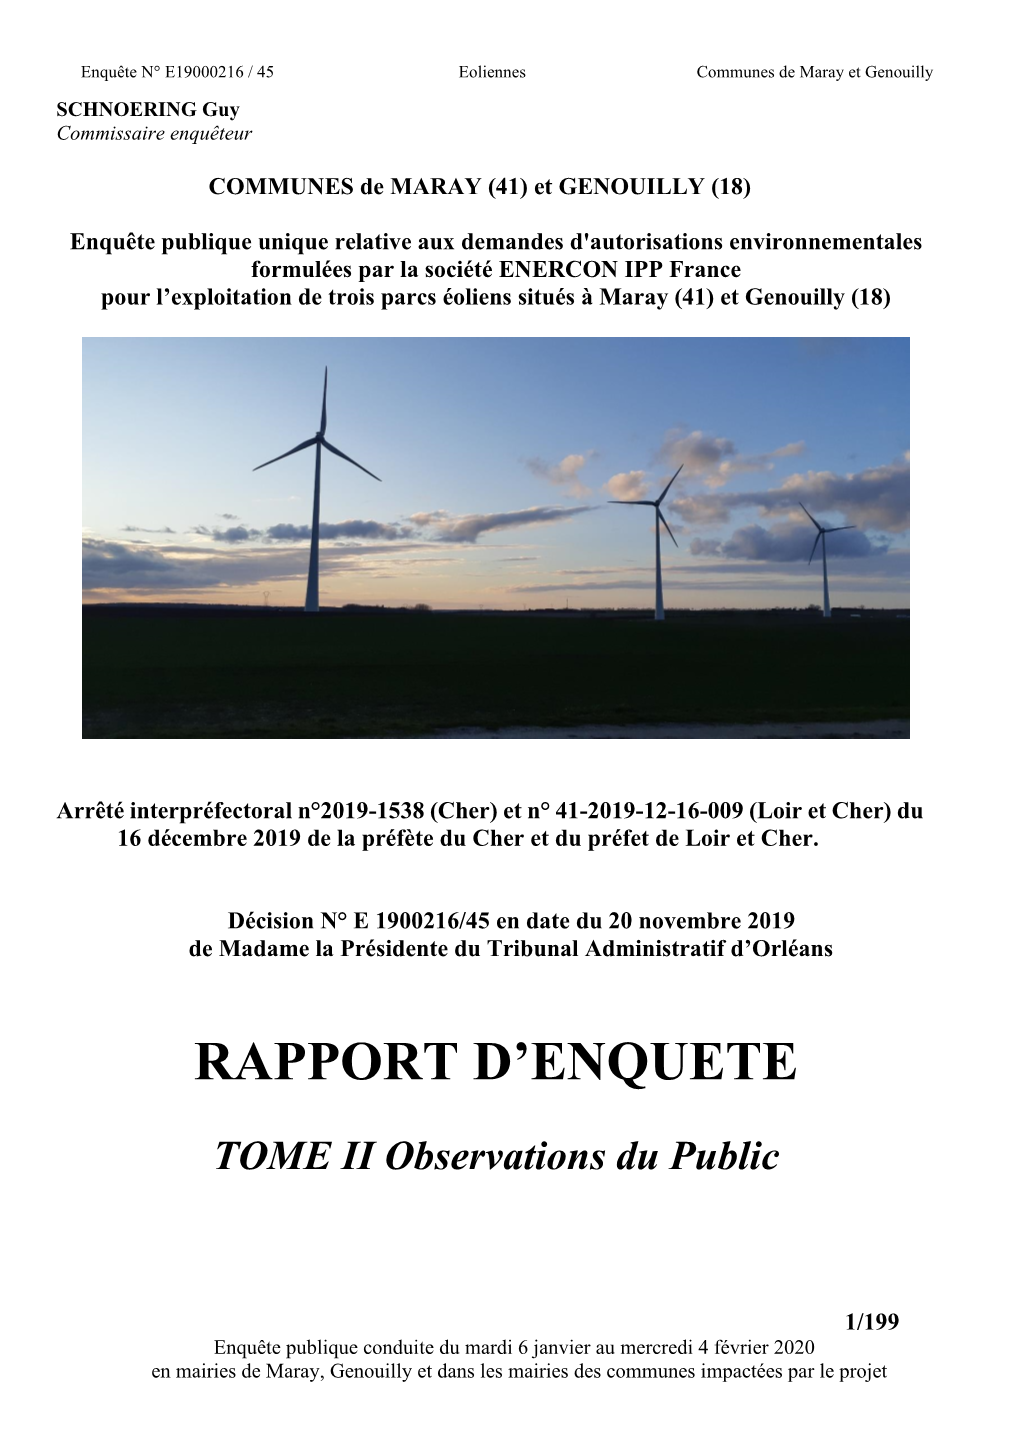 Tome II Rapport Eoliennes Maray Et Genouilly